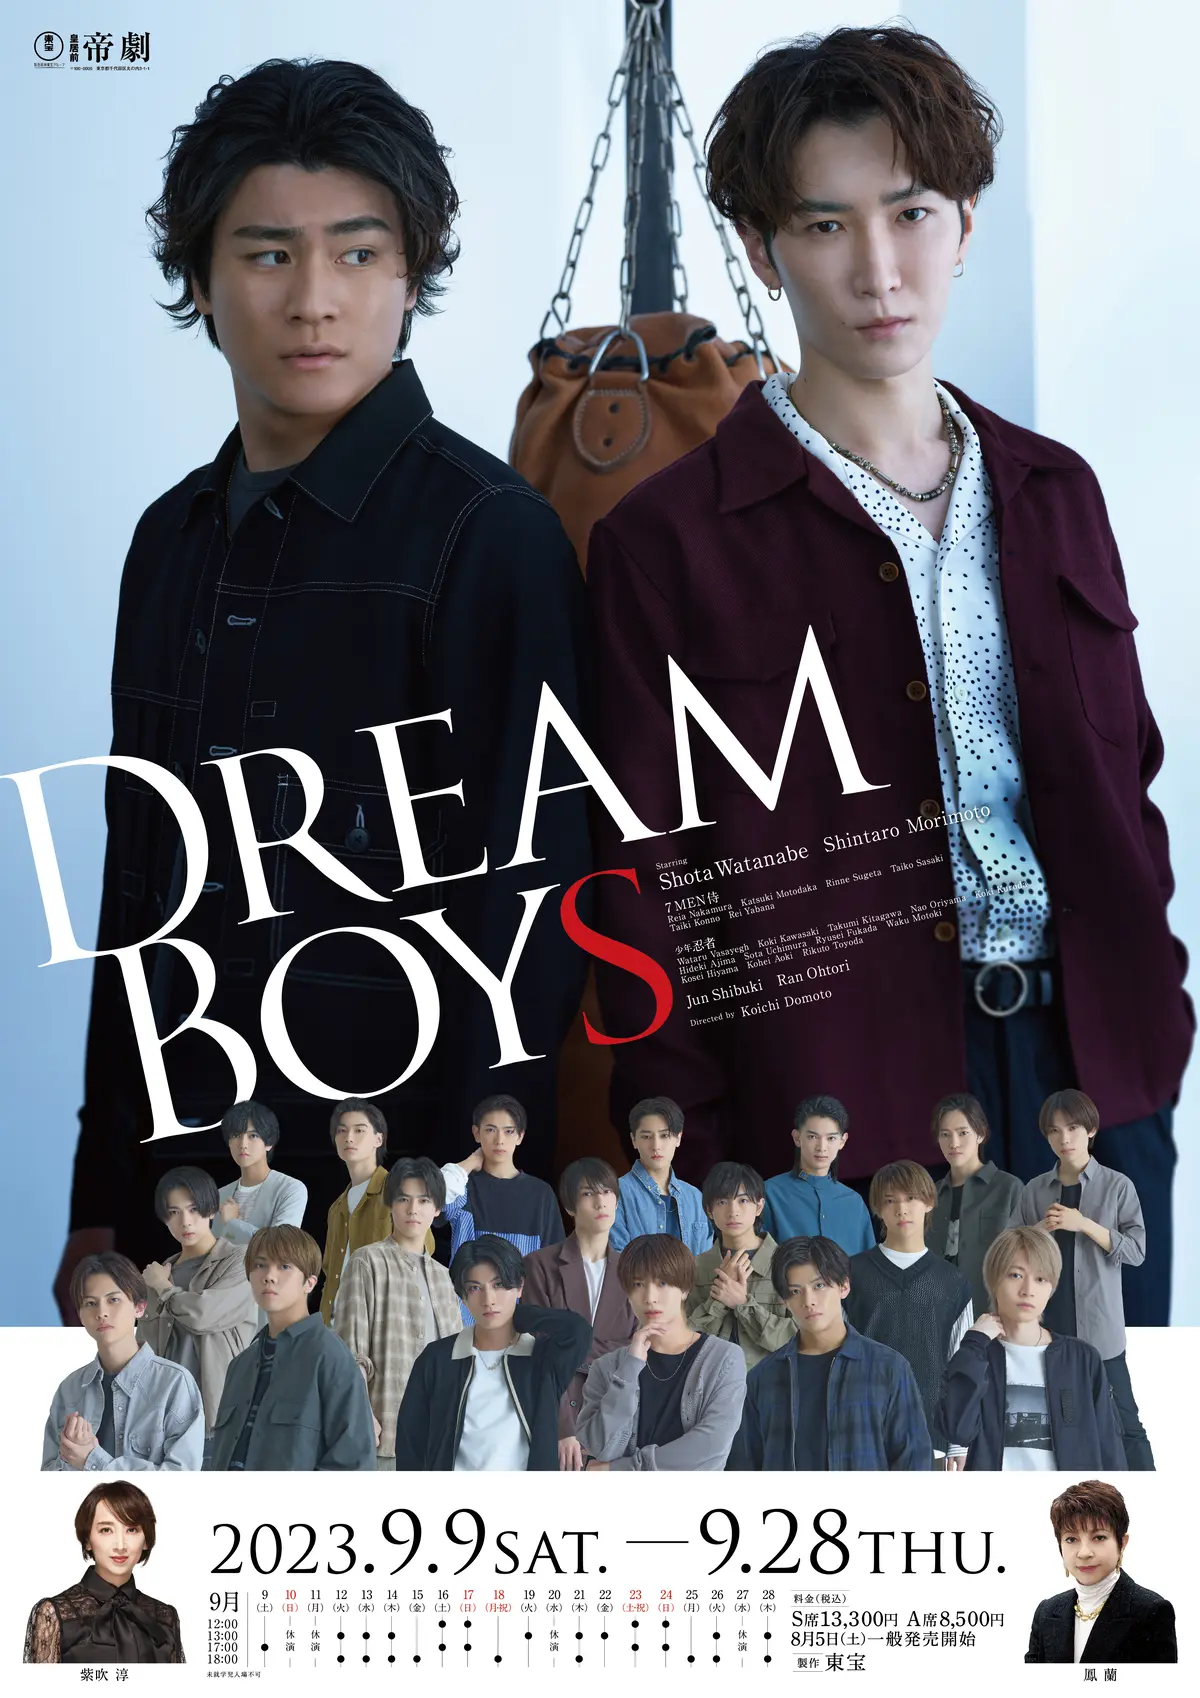 『DREAM BOYS』本ポスター